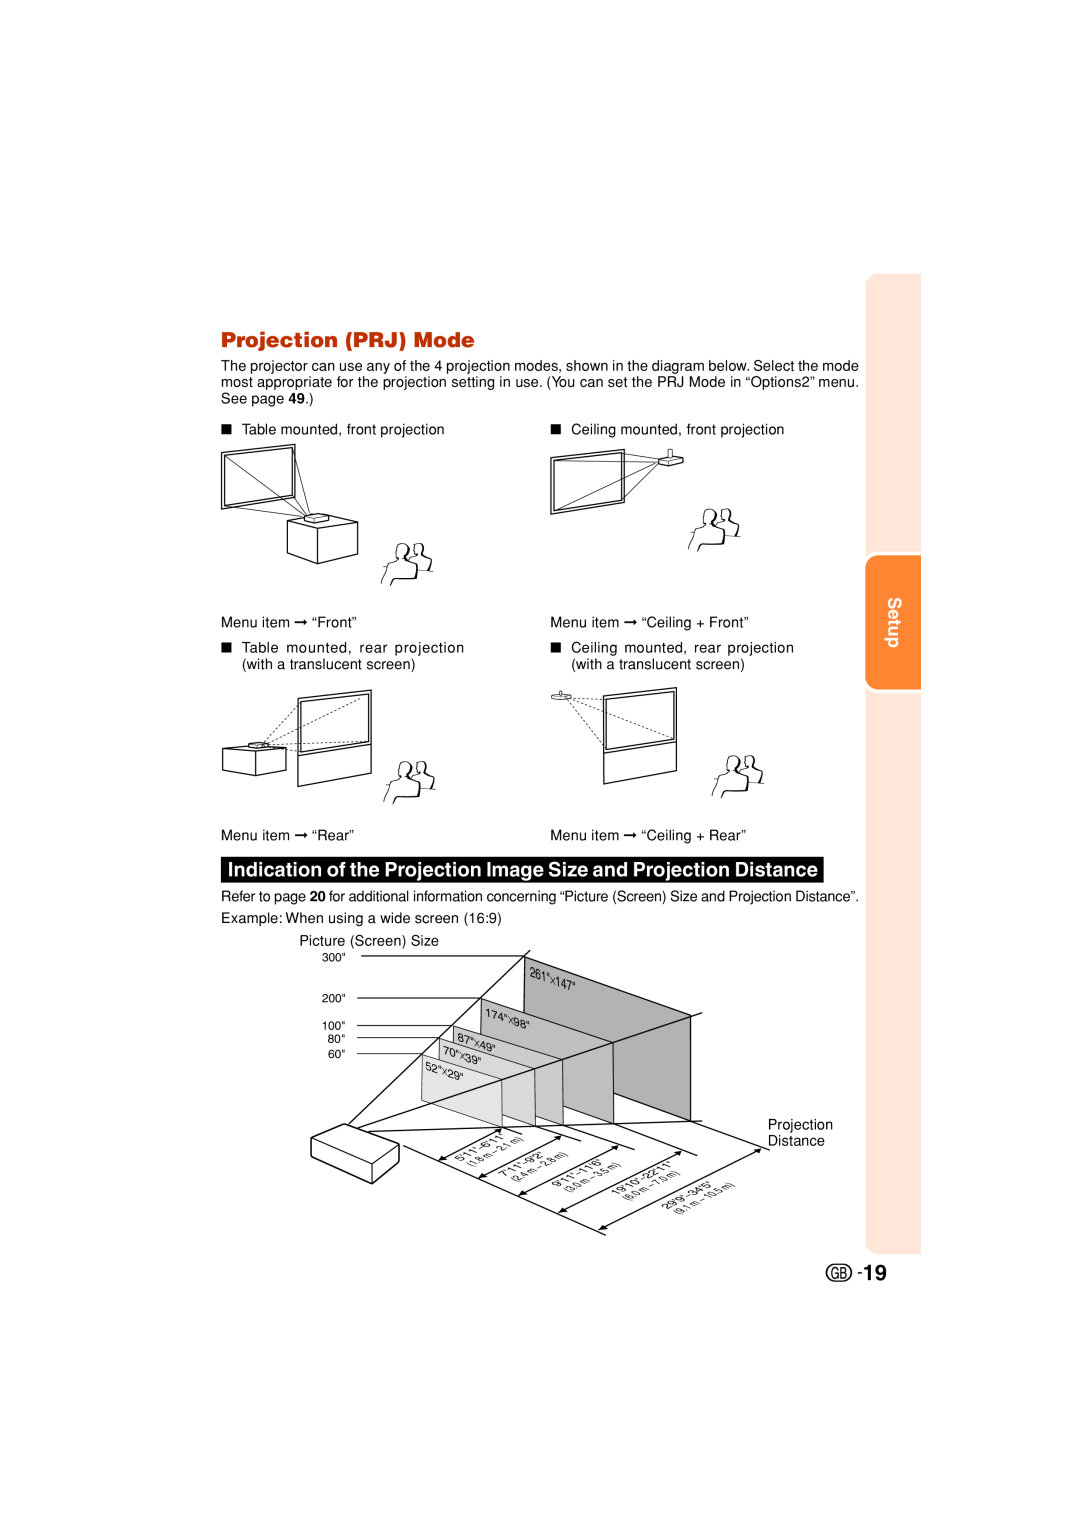 Sharp XV-Z3000 manual Projection PRJ Mode, Indication of the Projection Image Size and Projection Distance, Setup 